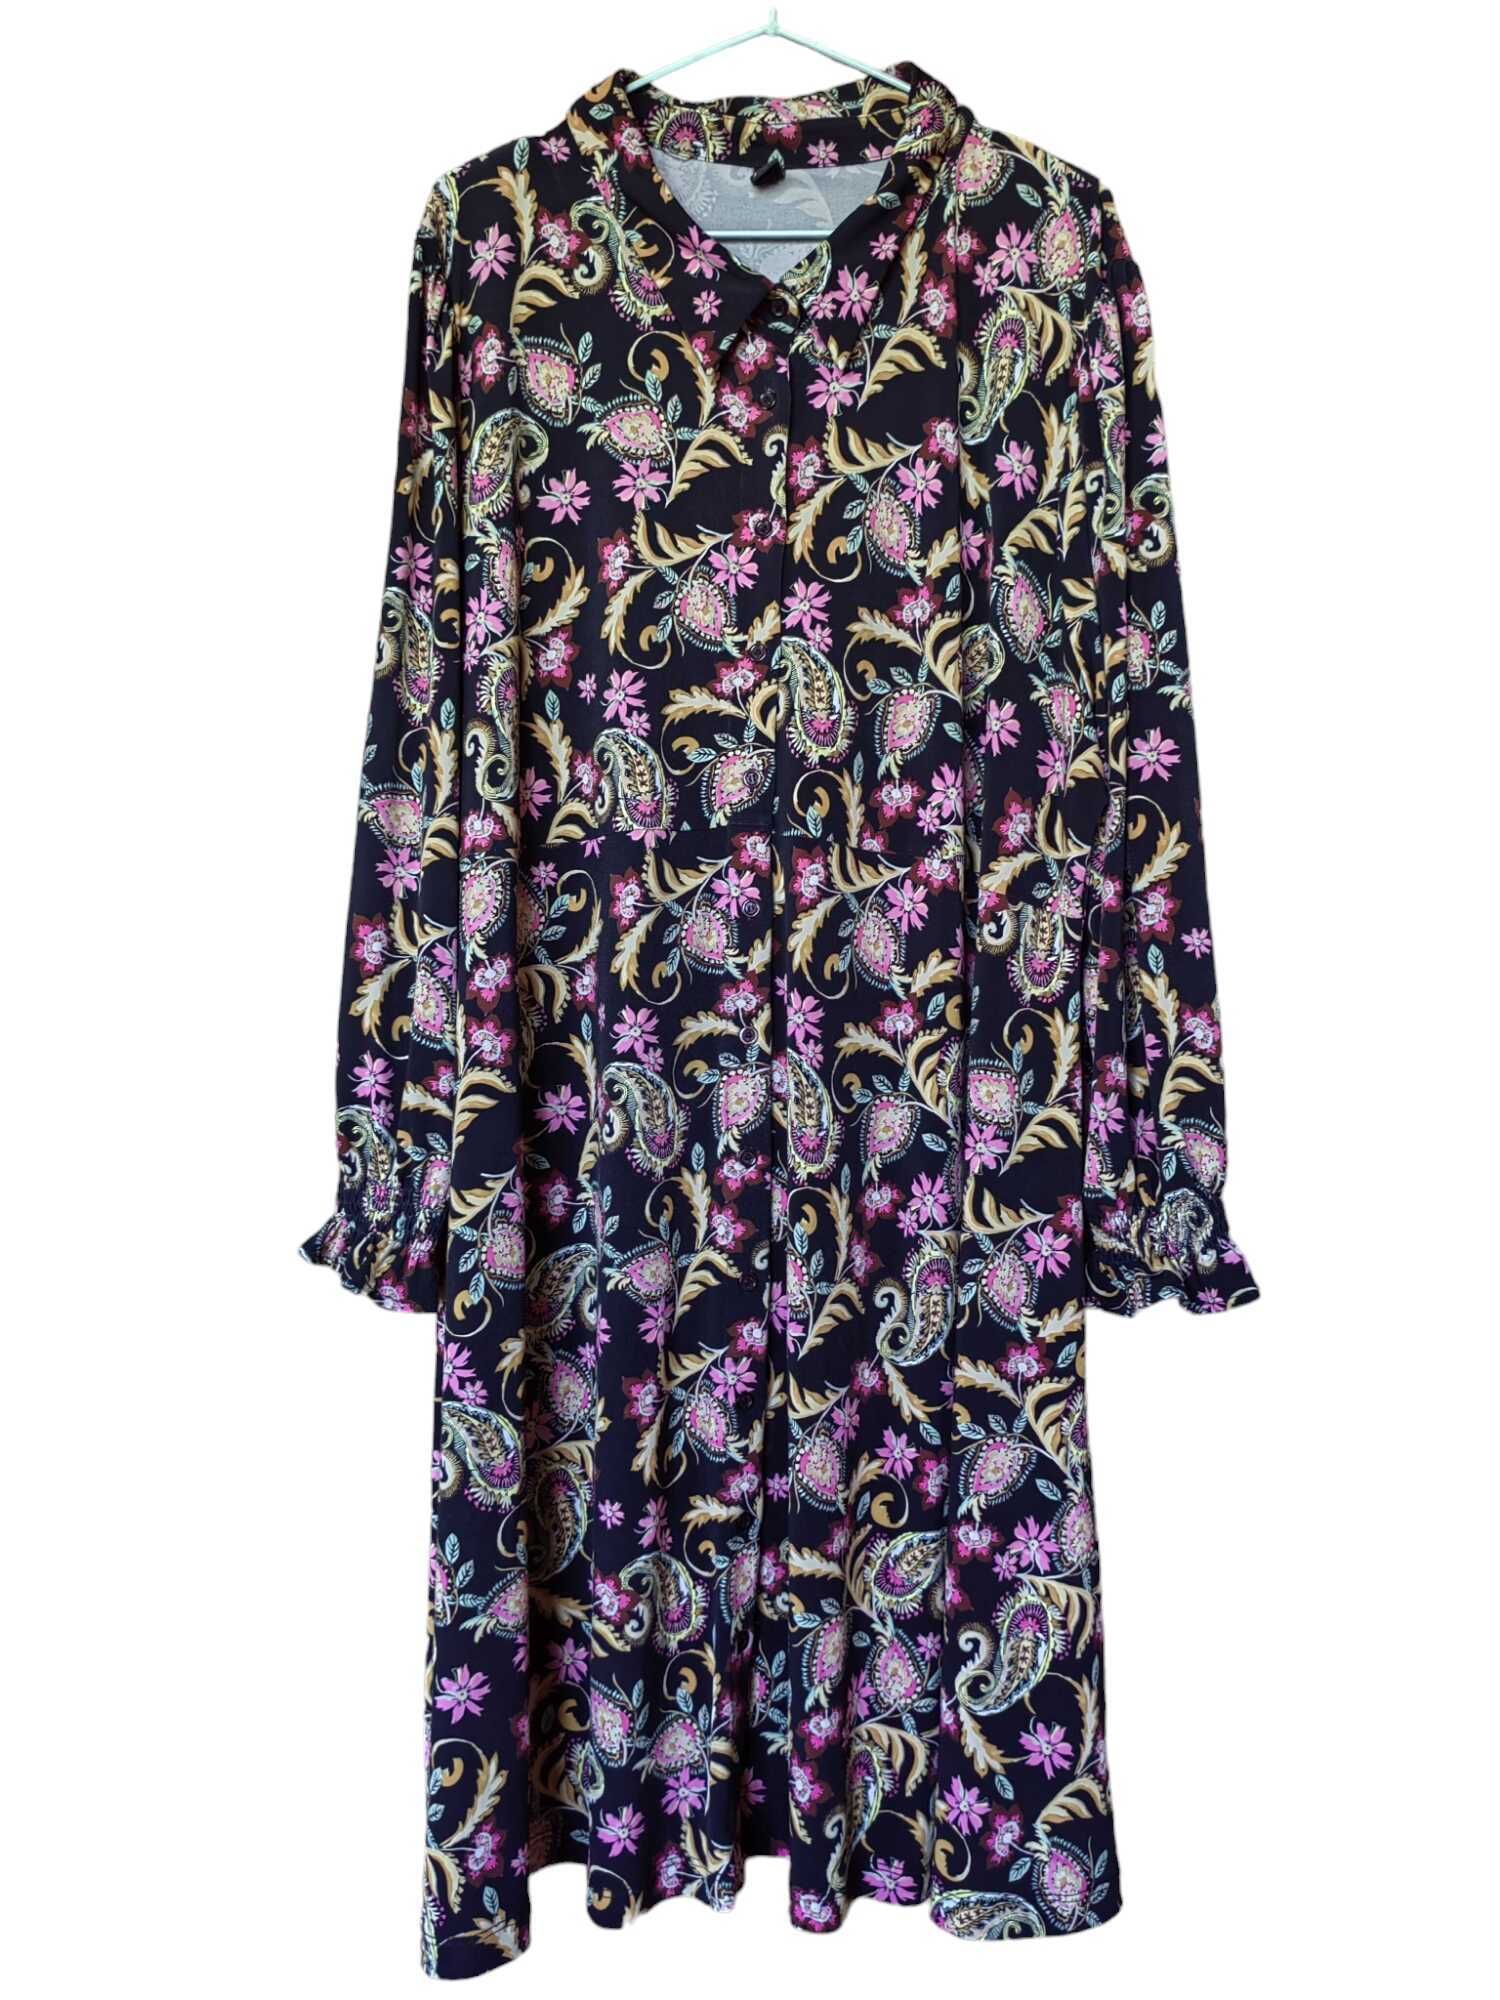 Дамска рокля с флорална щампа и копчета Yoek, 110х75 см, XXL